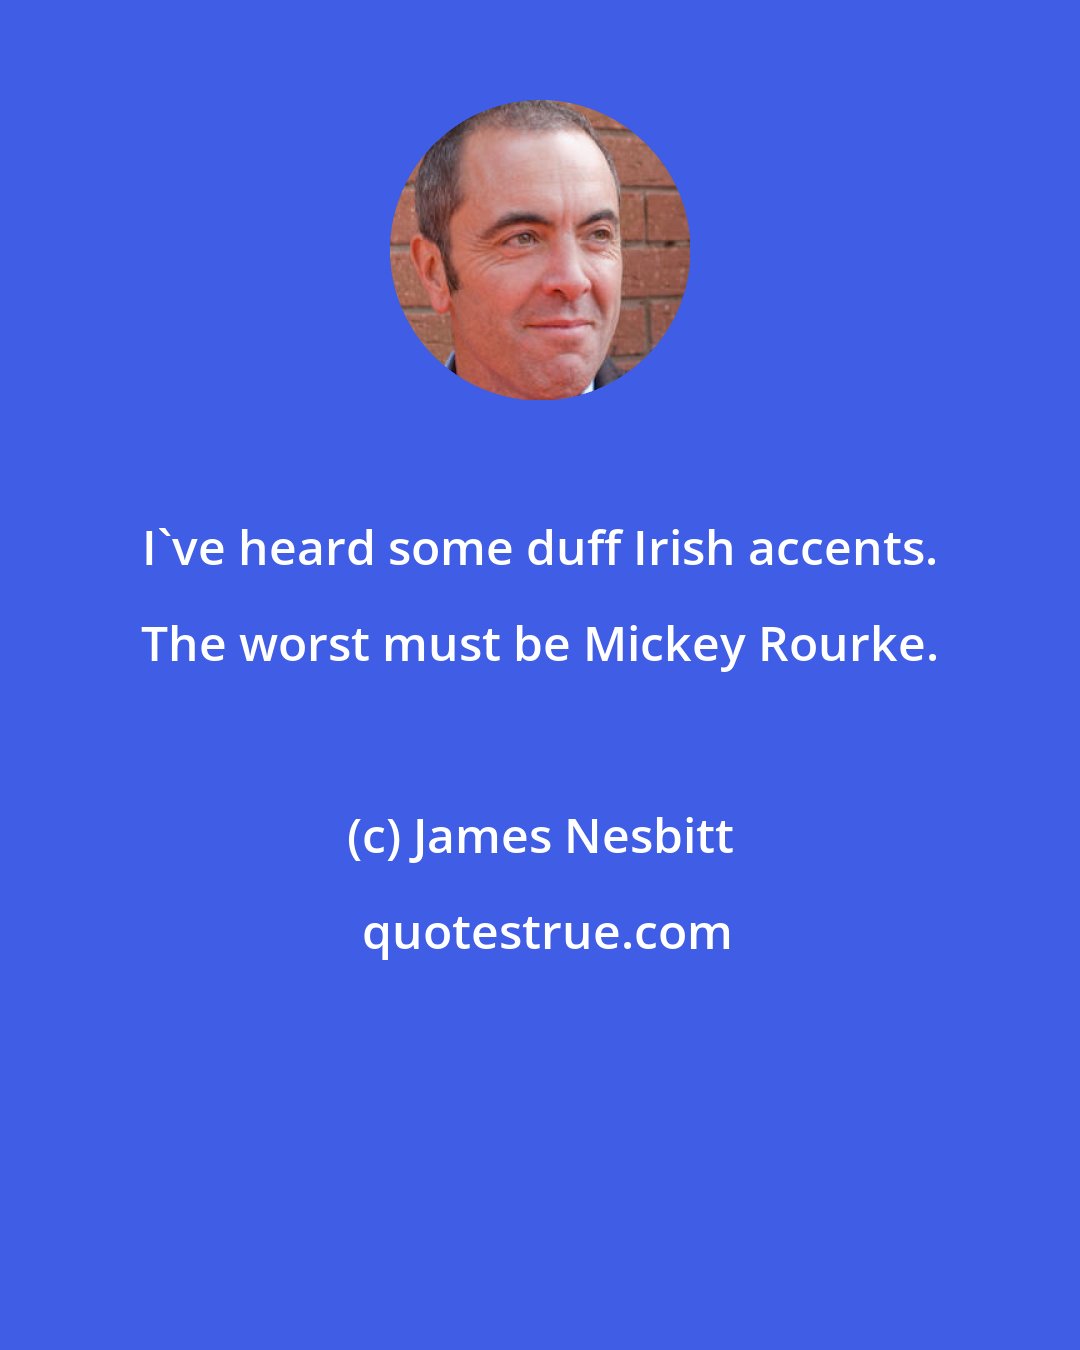 James Nesbitt: I've heard some duff Irish accents. The worst must be Mickey Rourke.